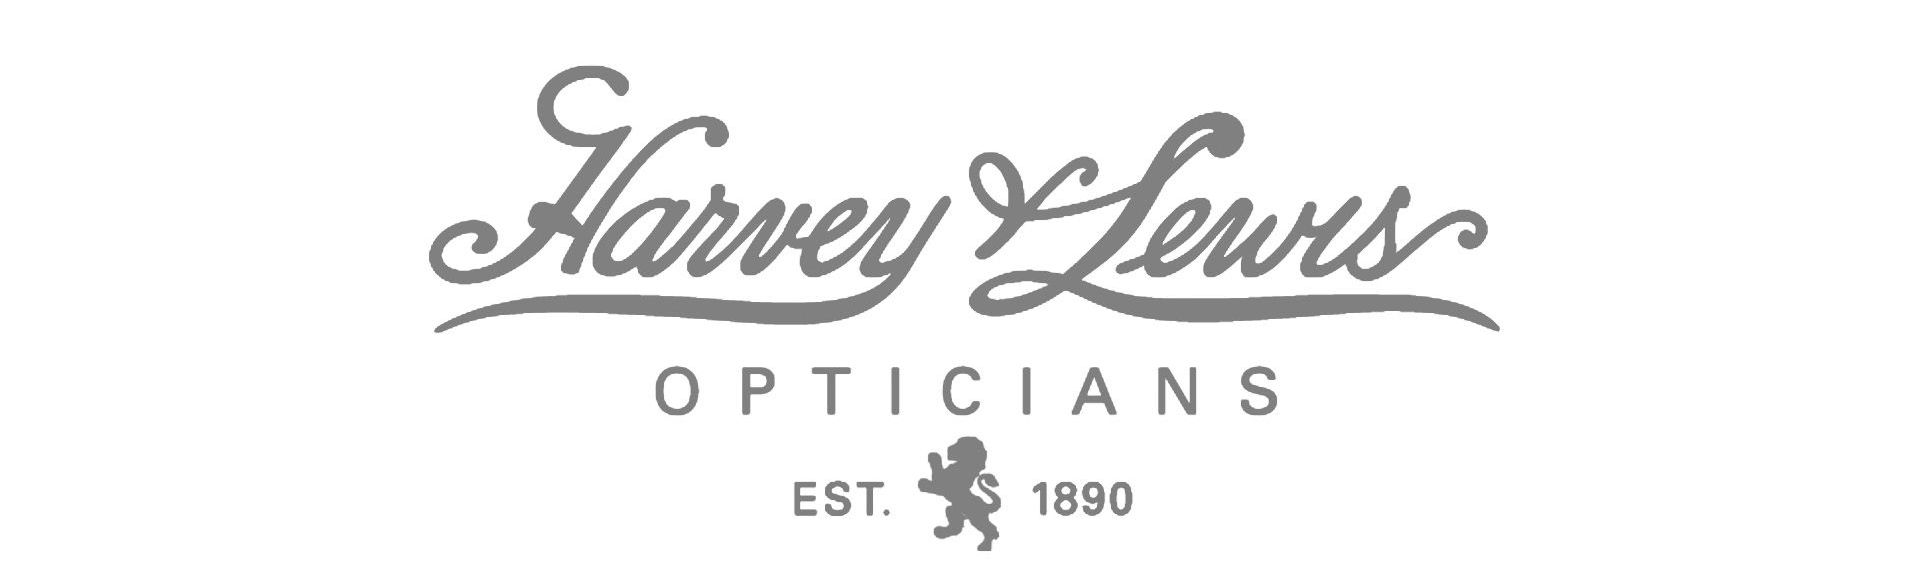 Harvey & Lewis Opticians logo 